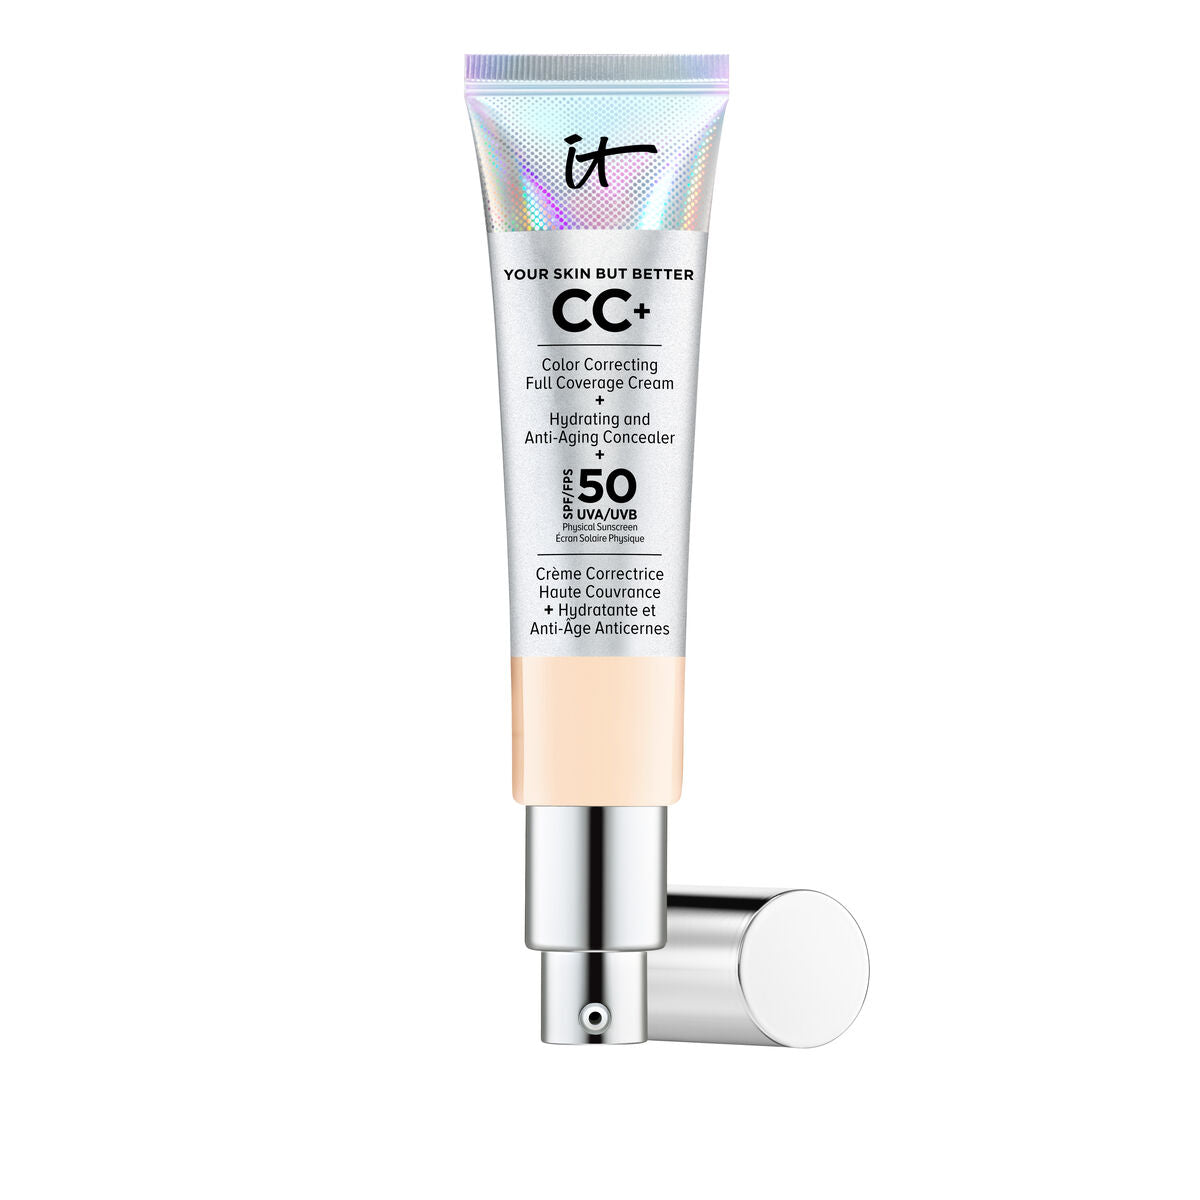 CC Cream It Cosmetics Your Skin But Better fair light Spf 50 32 ml-0